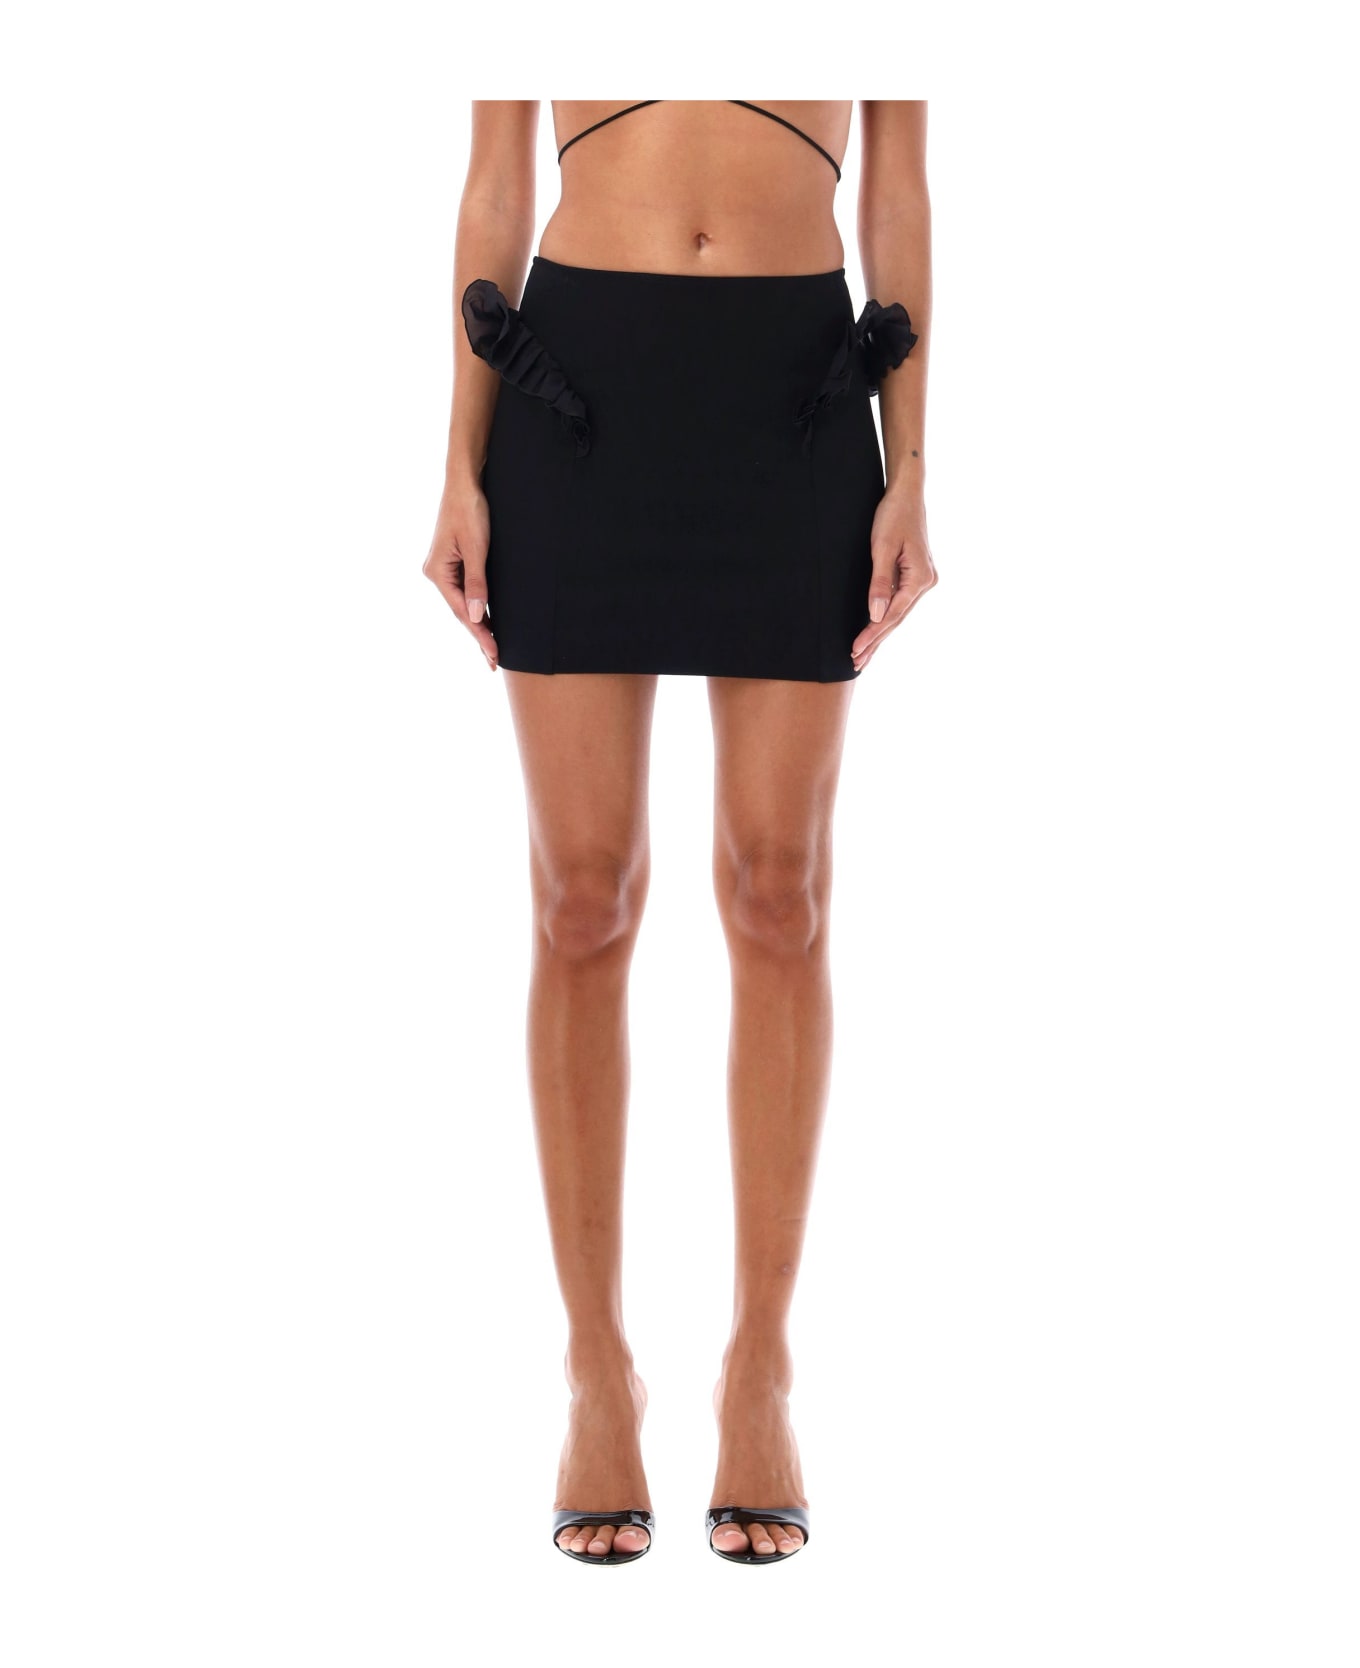 Nensi Dojaka Frilled Mini Skirt - BLACK